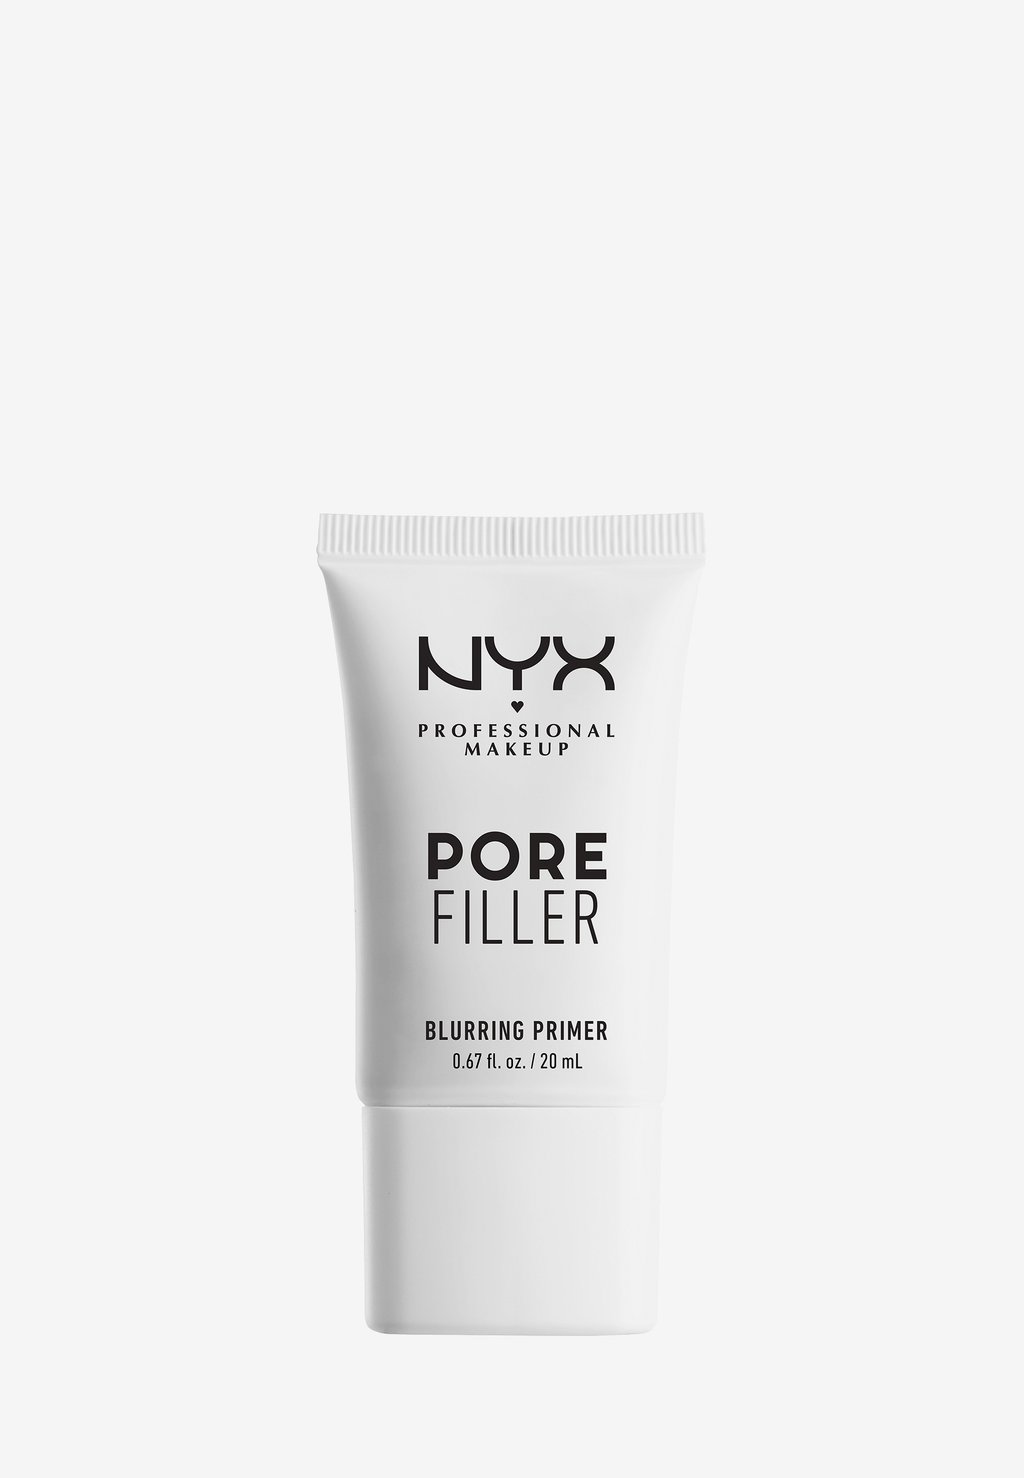 Праймер Pore Filler Primer Nyx Professional Makeup, цвет pore filler